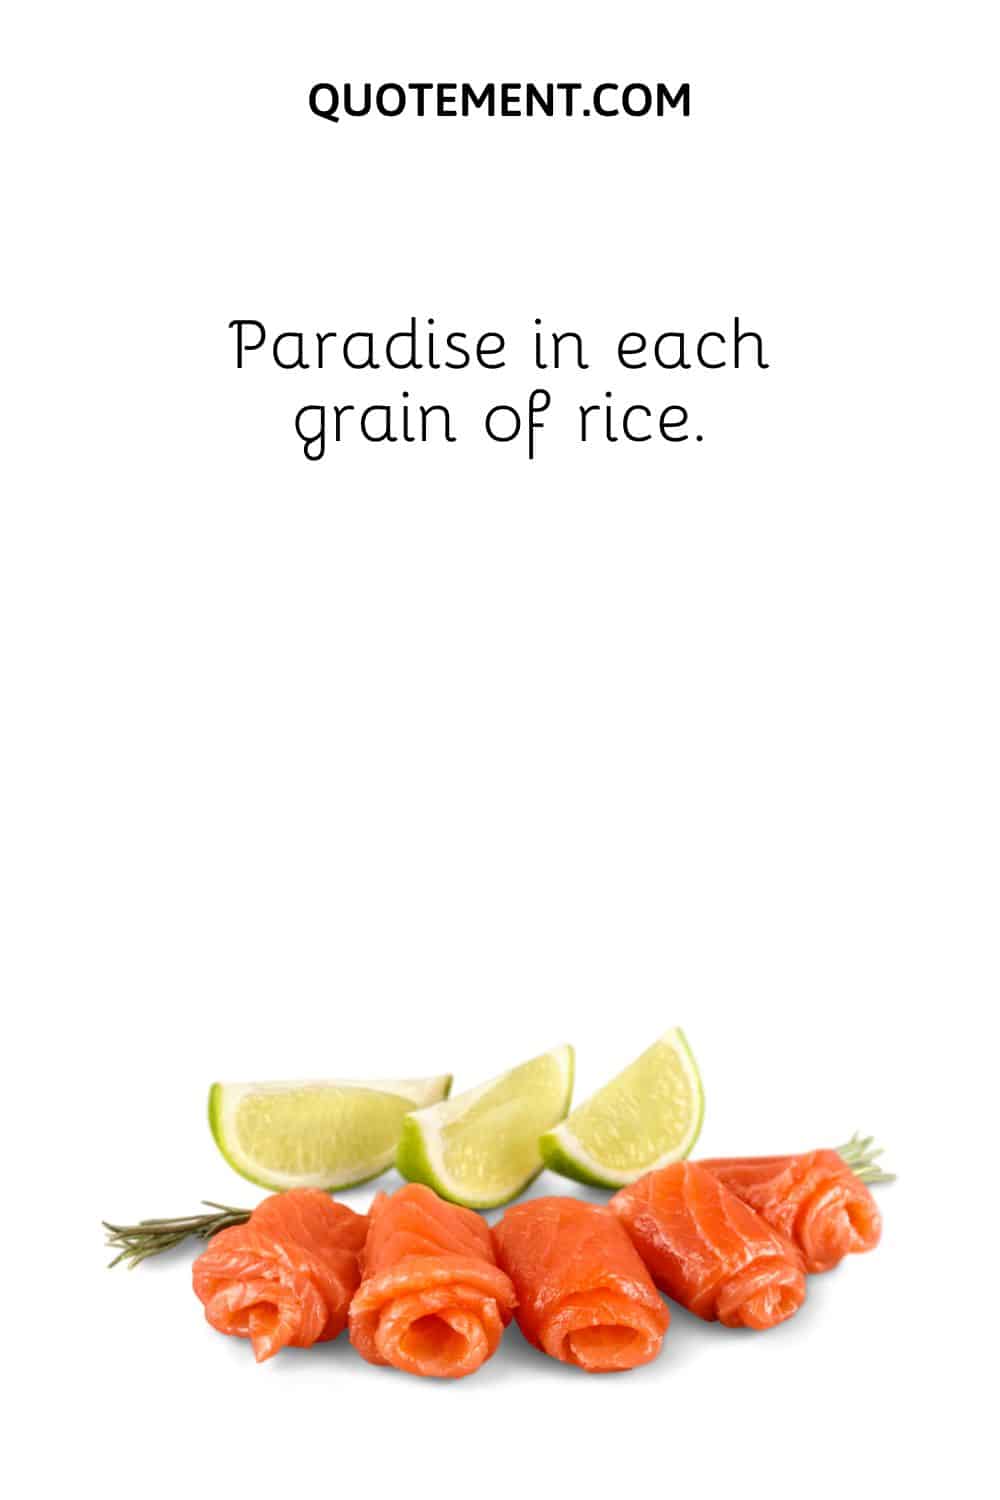 Paradise in each grain of rice.